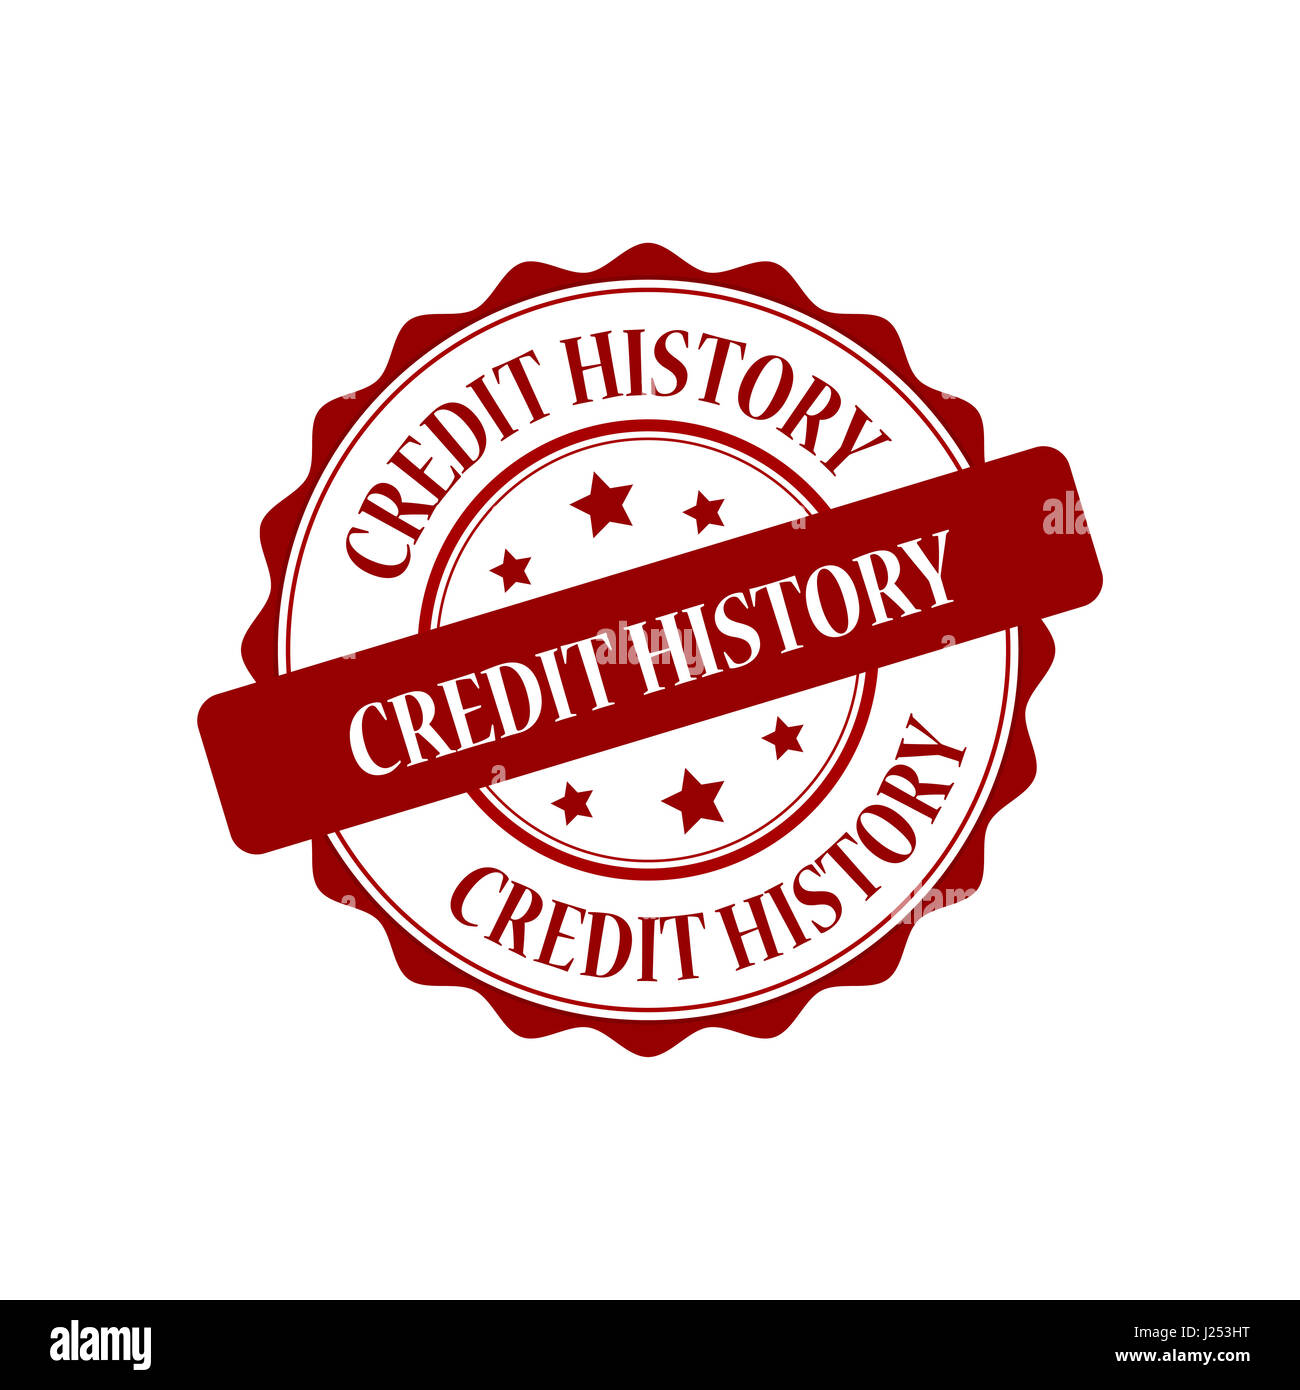 Credit history stamp illustration Stock Photo